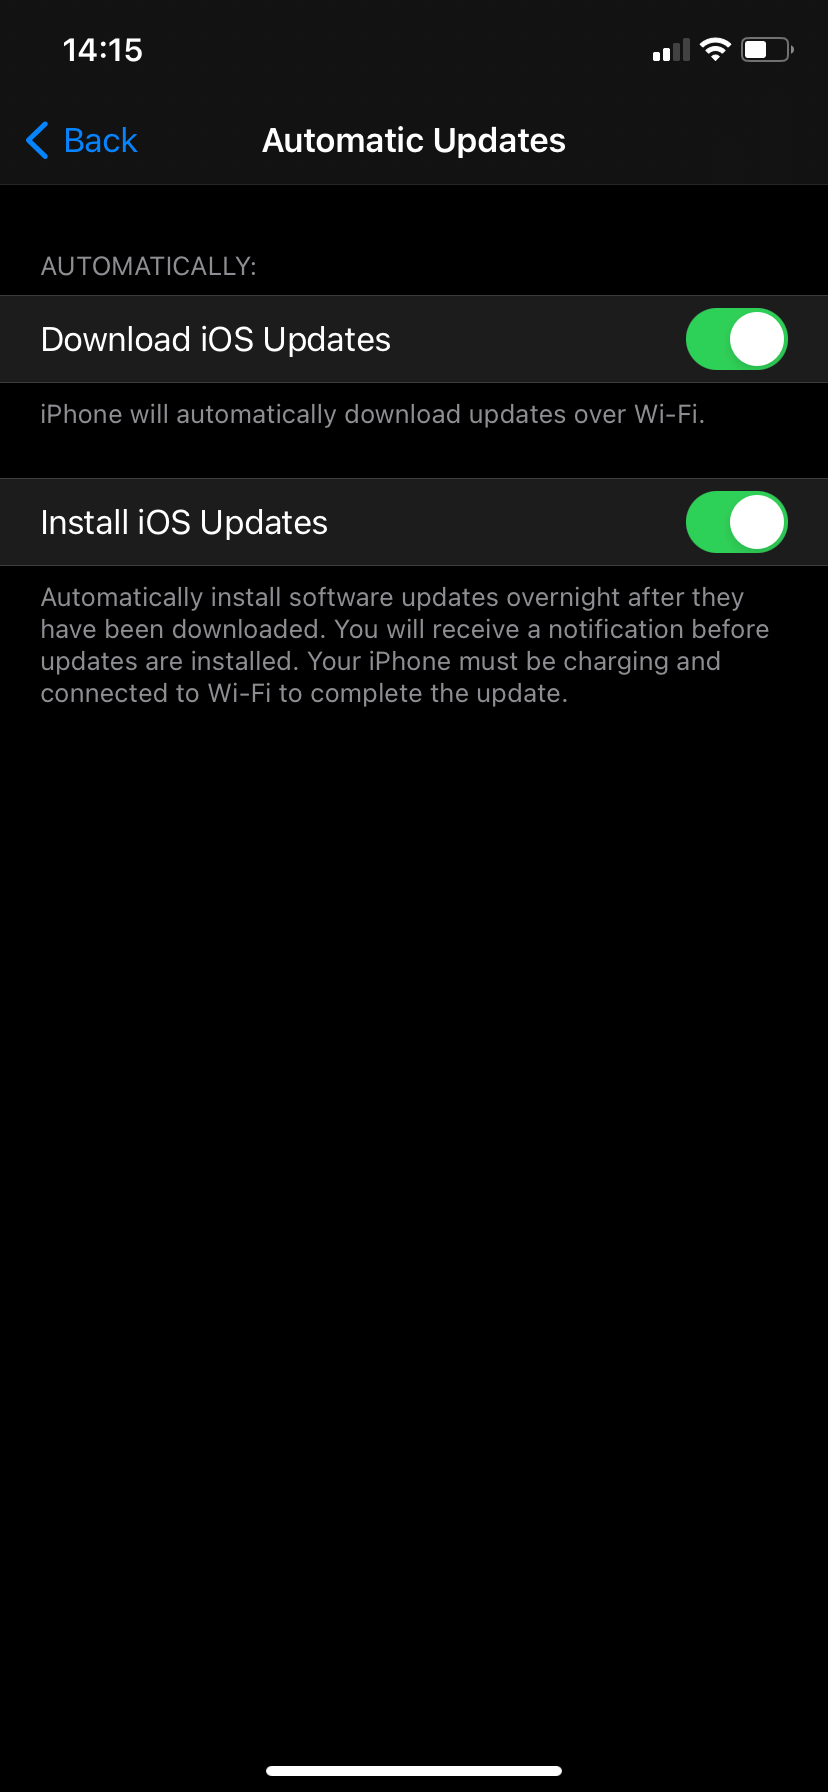 Automatic Updates iPhone